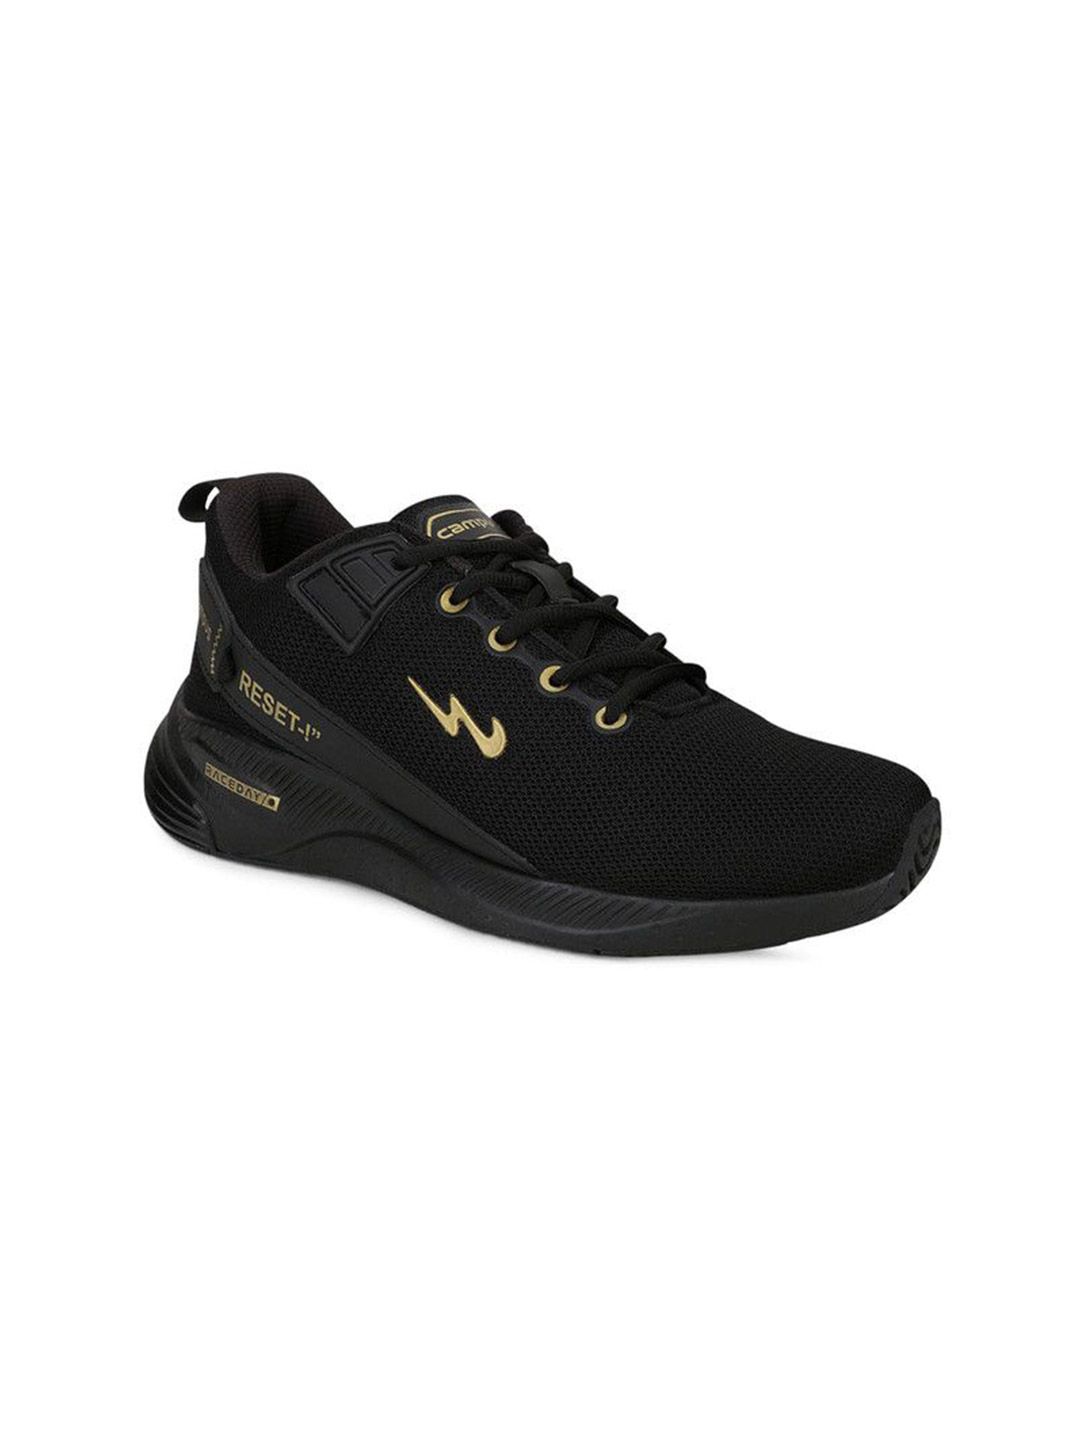 Buy Men Refresh Pro Black Running Shoes From Fancode Shop.